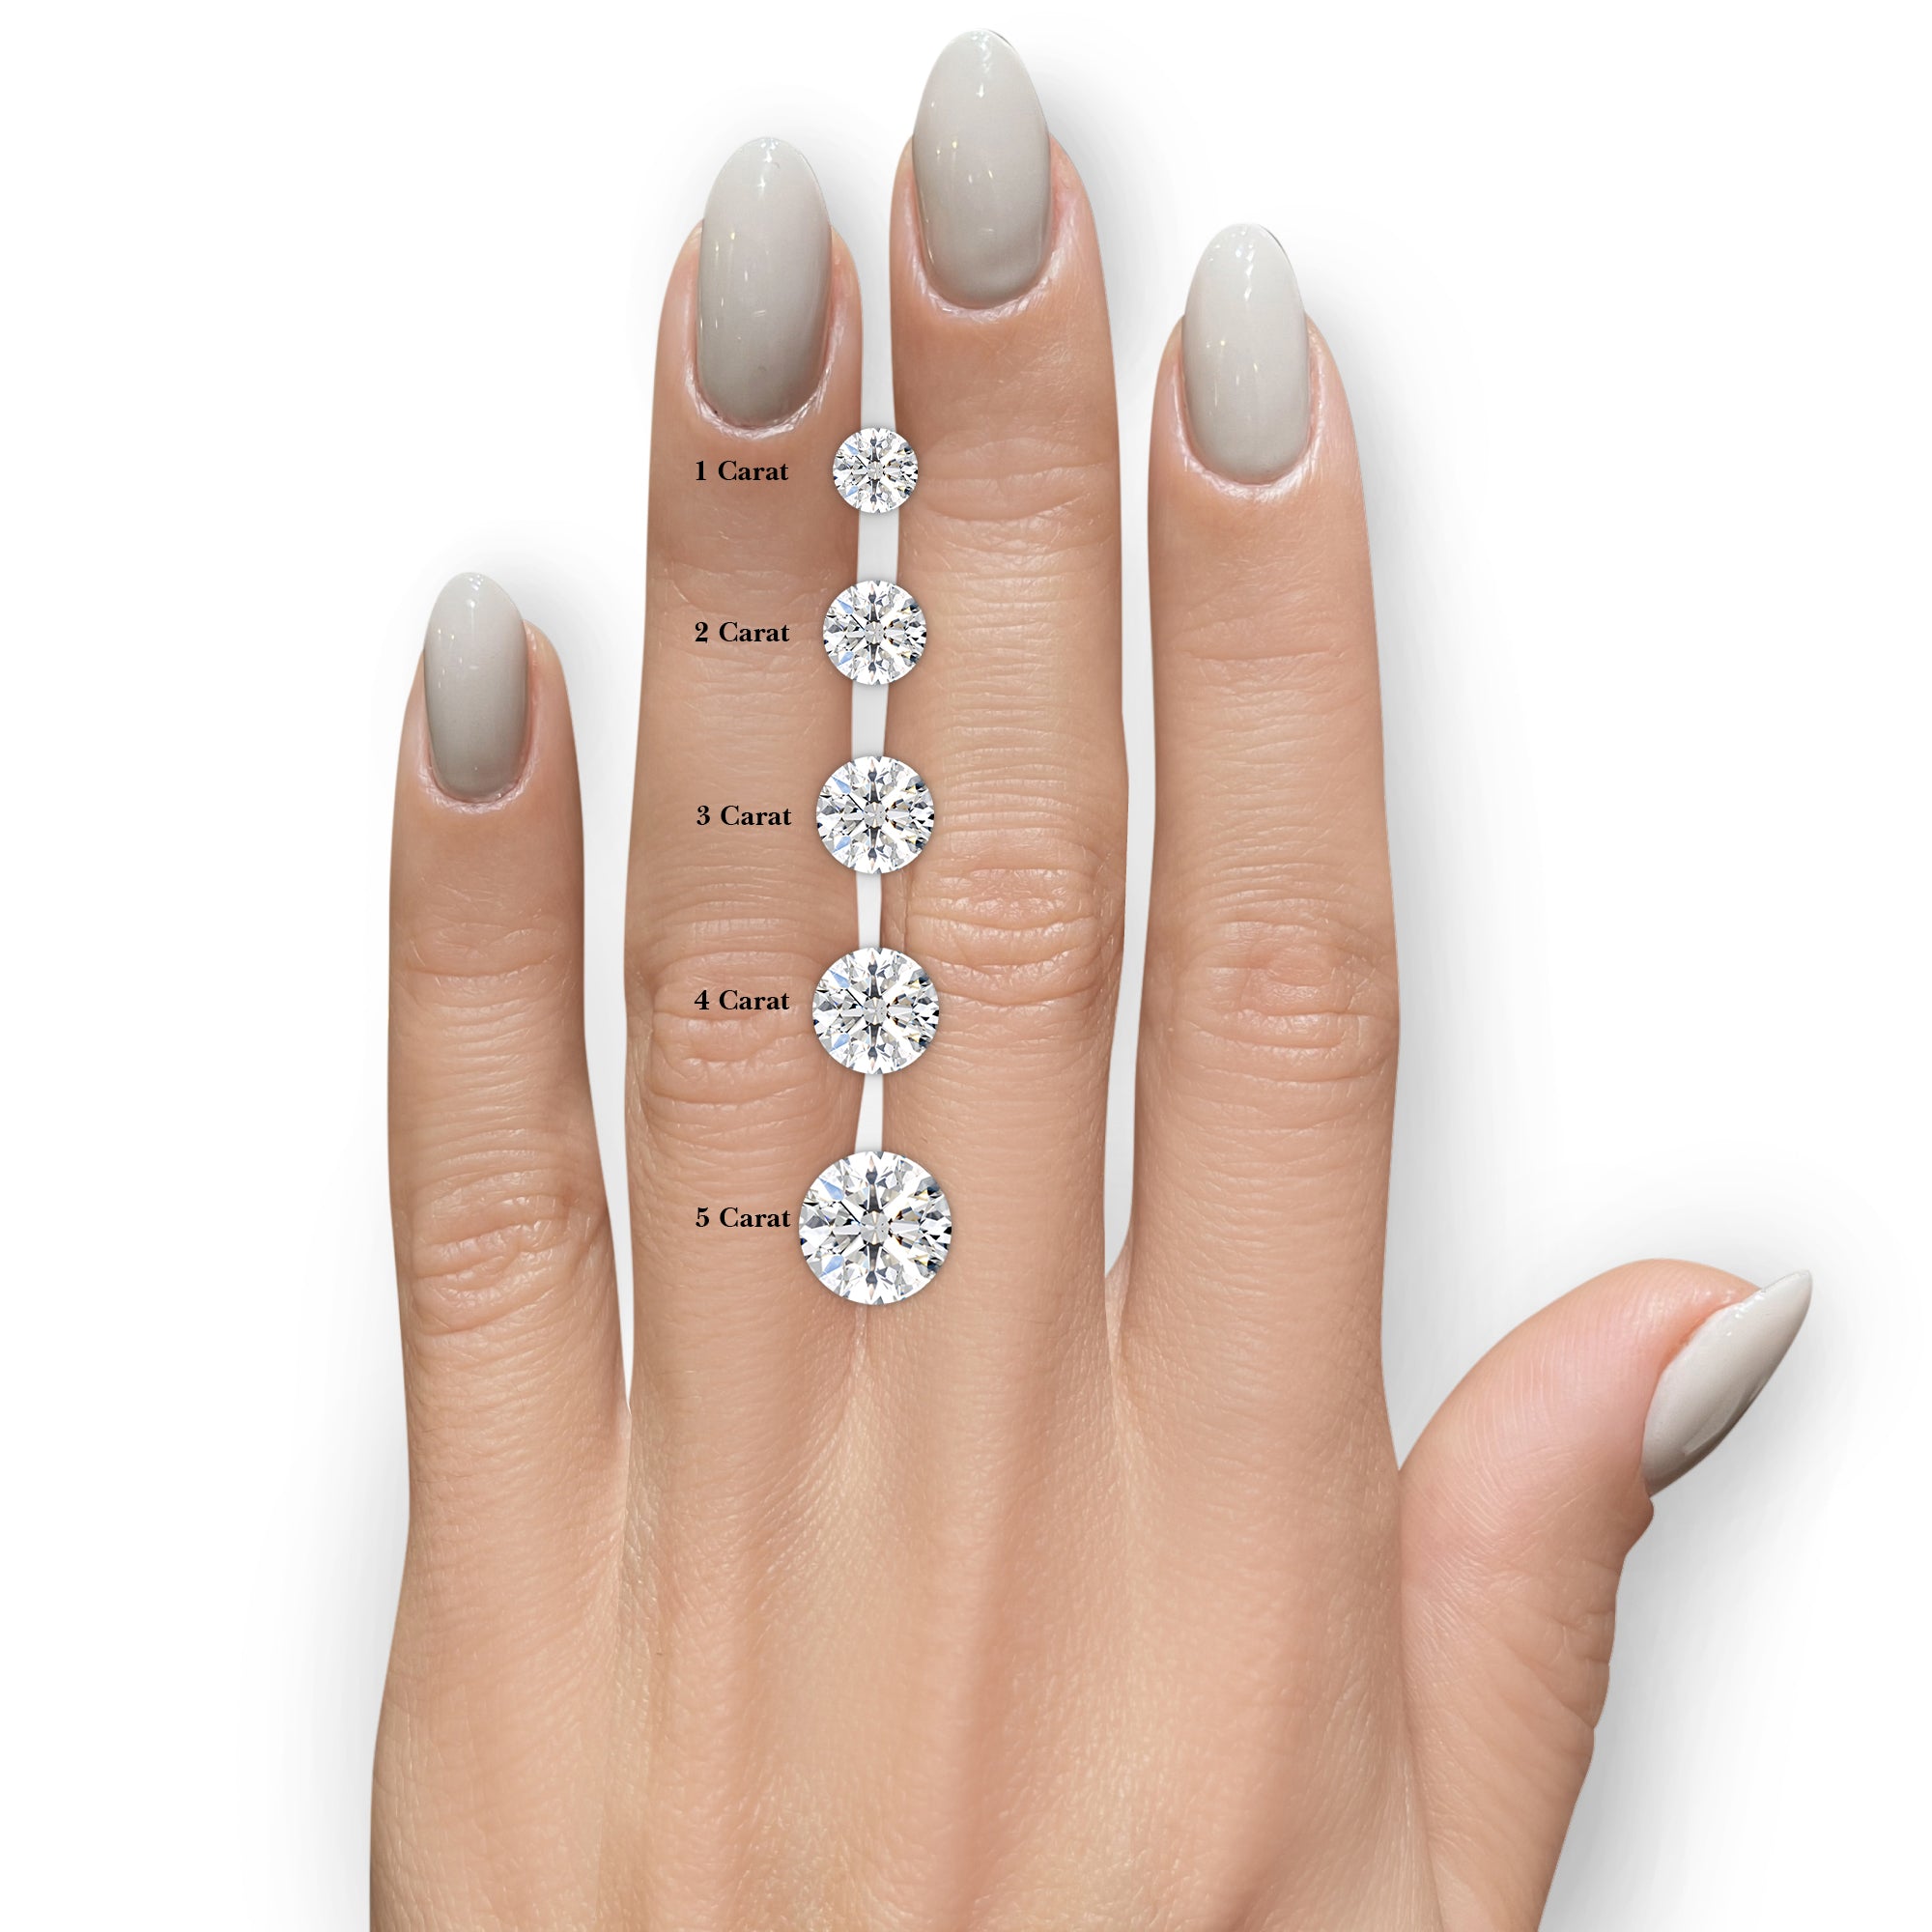 Amelia Diamond Engagement Ring - 14K Rose Gold